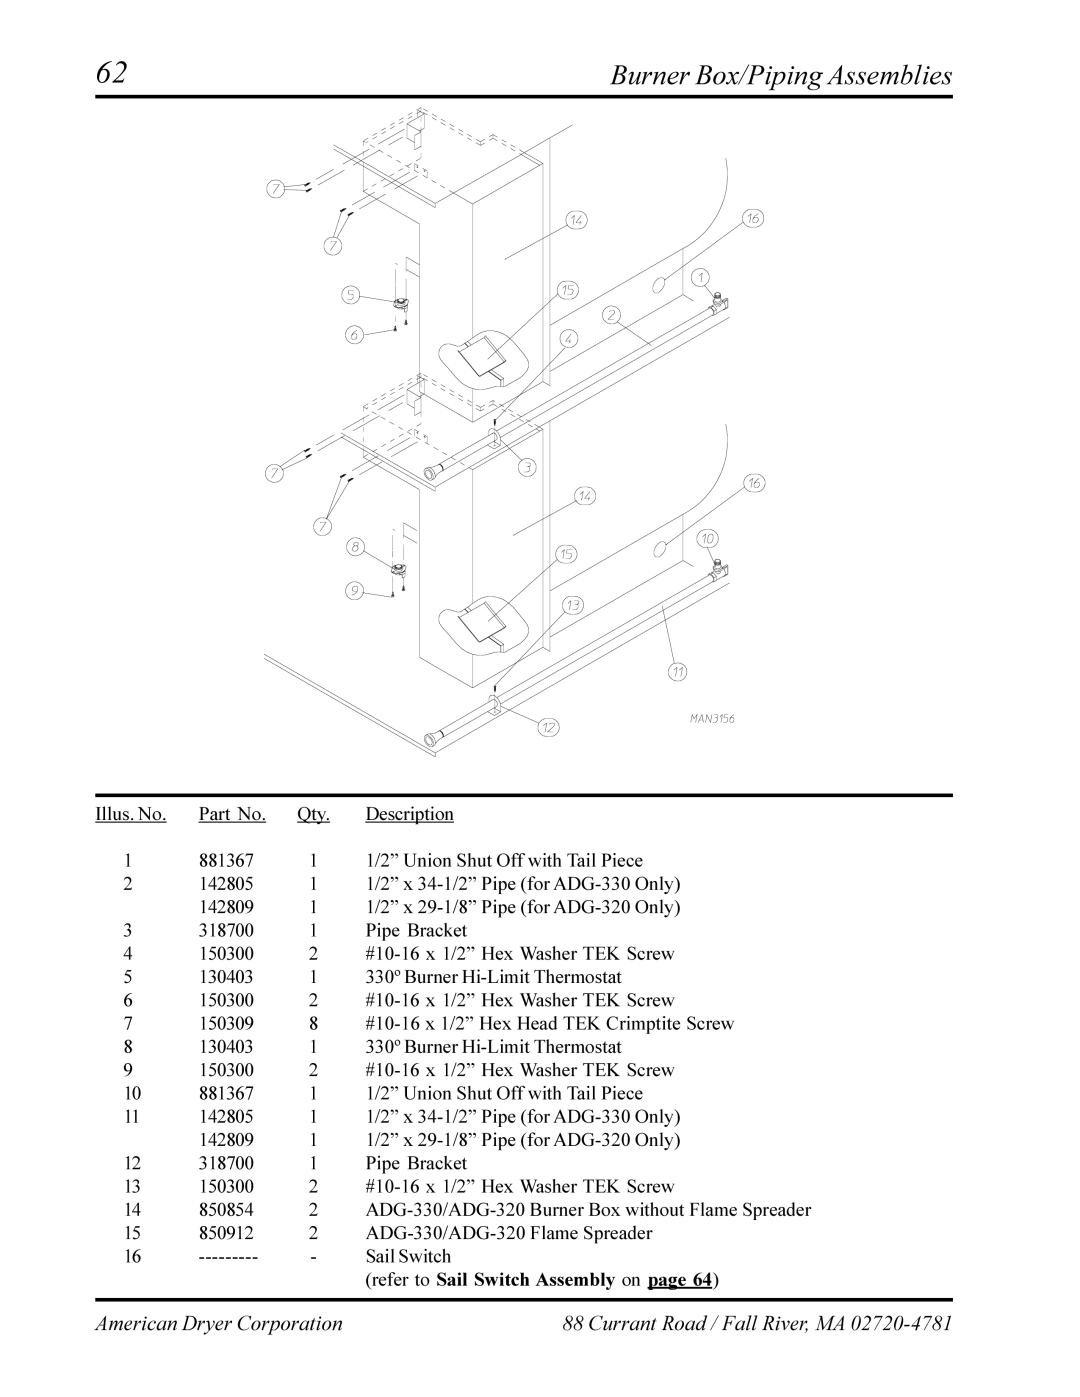 American Dryer Corp AD-320, AD-330 manual Burner Box/Piping Assemblies 